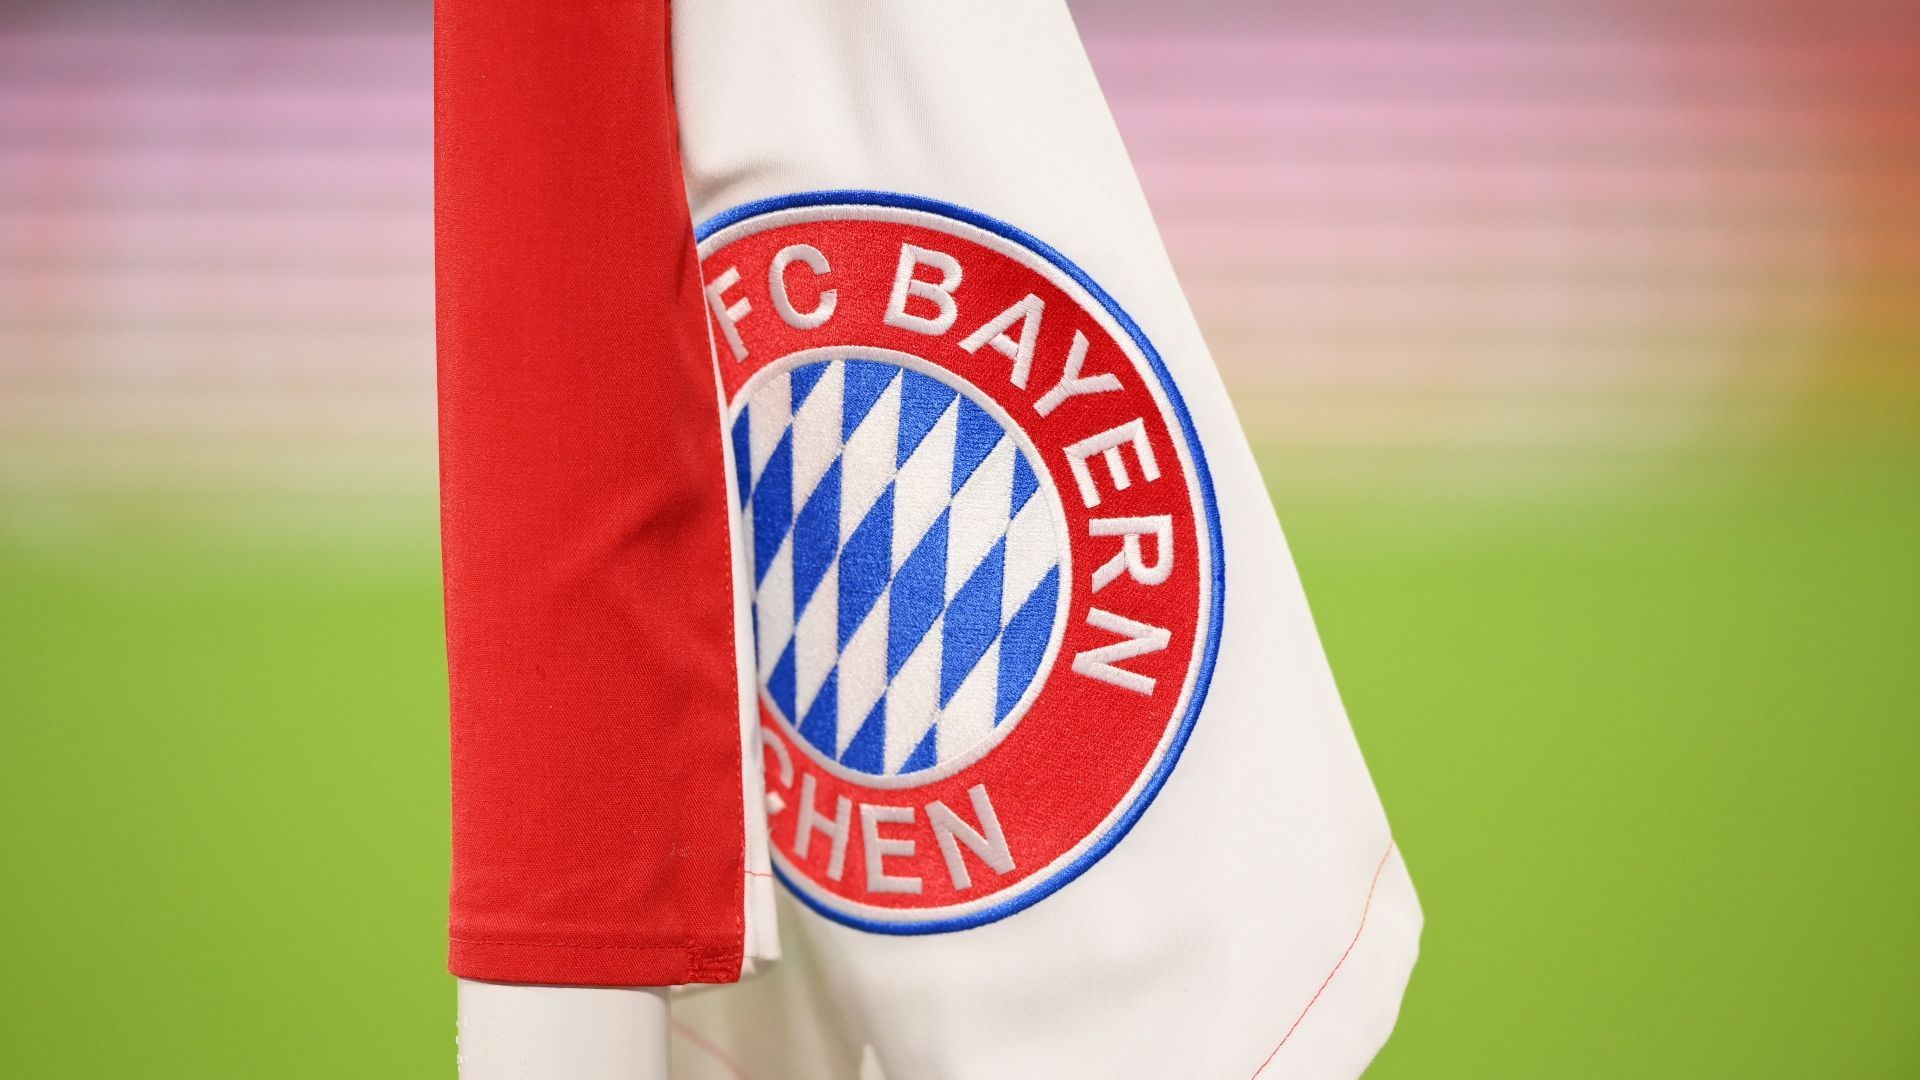 
                <strong>FC Bayern - Personaletat (2021)</strong><br>
                373,36 Millionen Euro (1. in der Bundesliga)
              